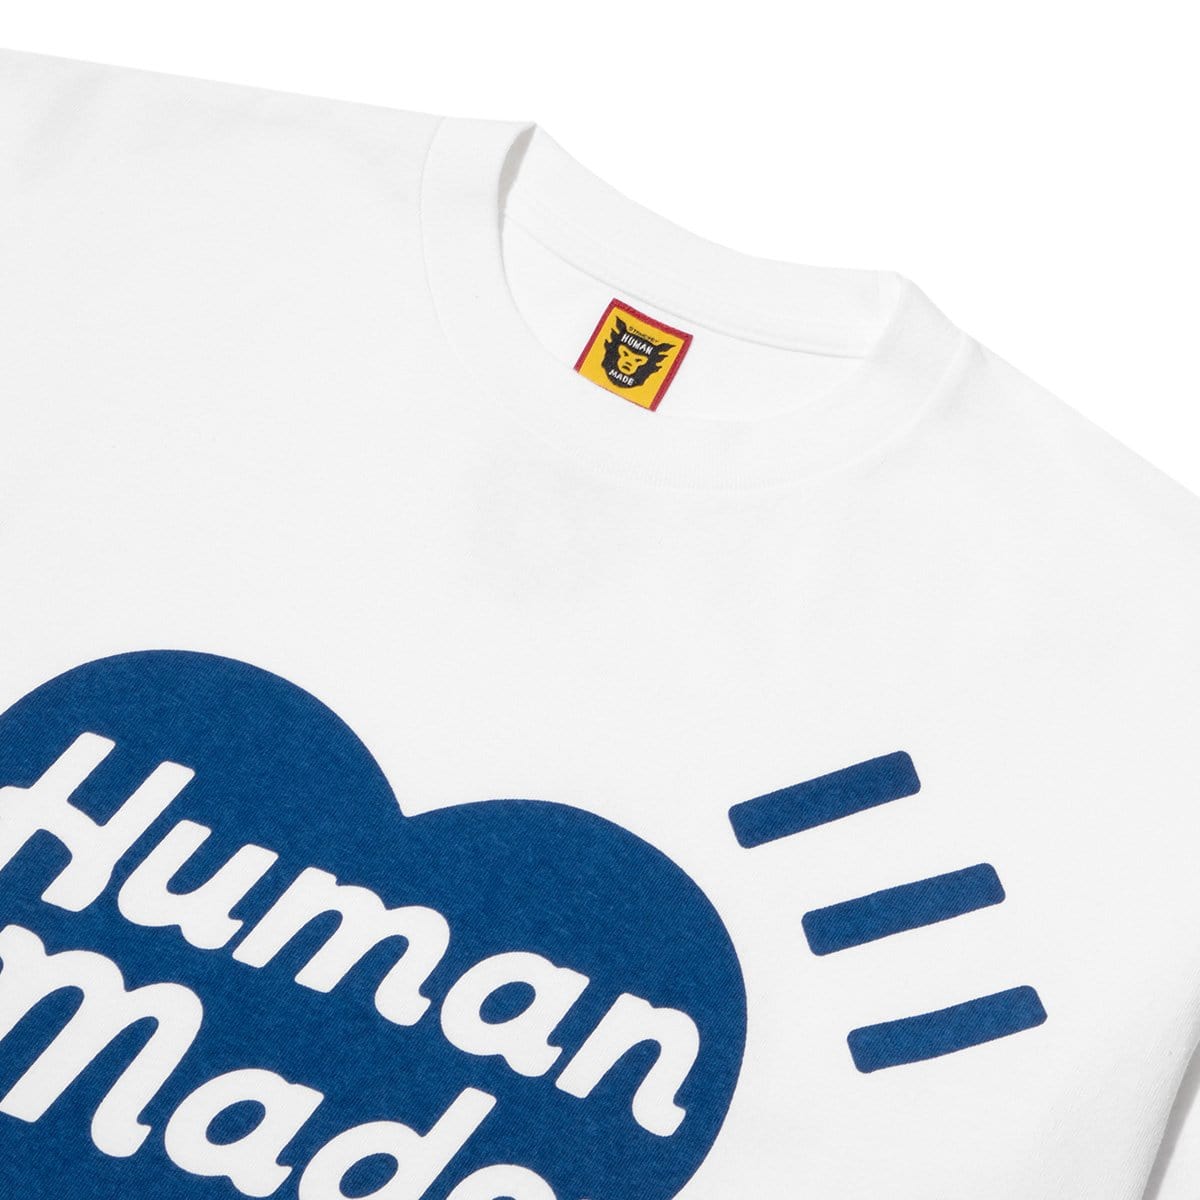 Human Made T-Shirts T-SHIRT #1920